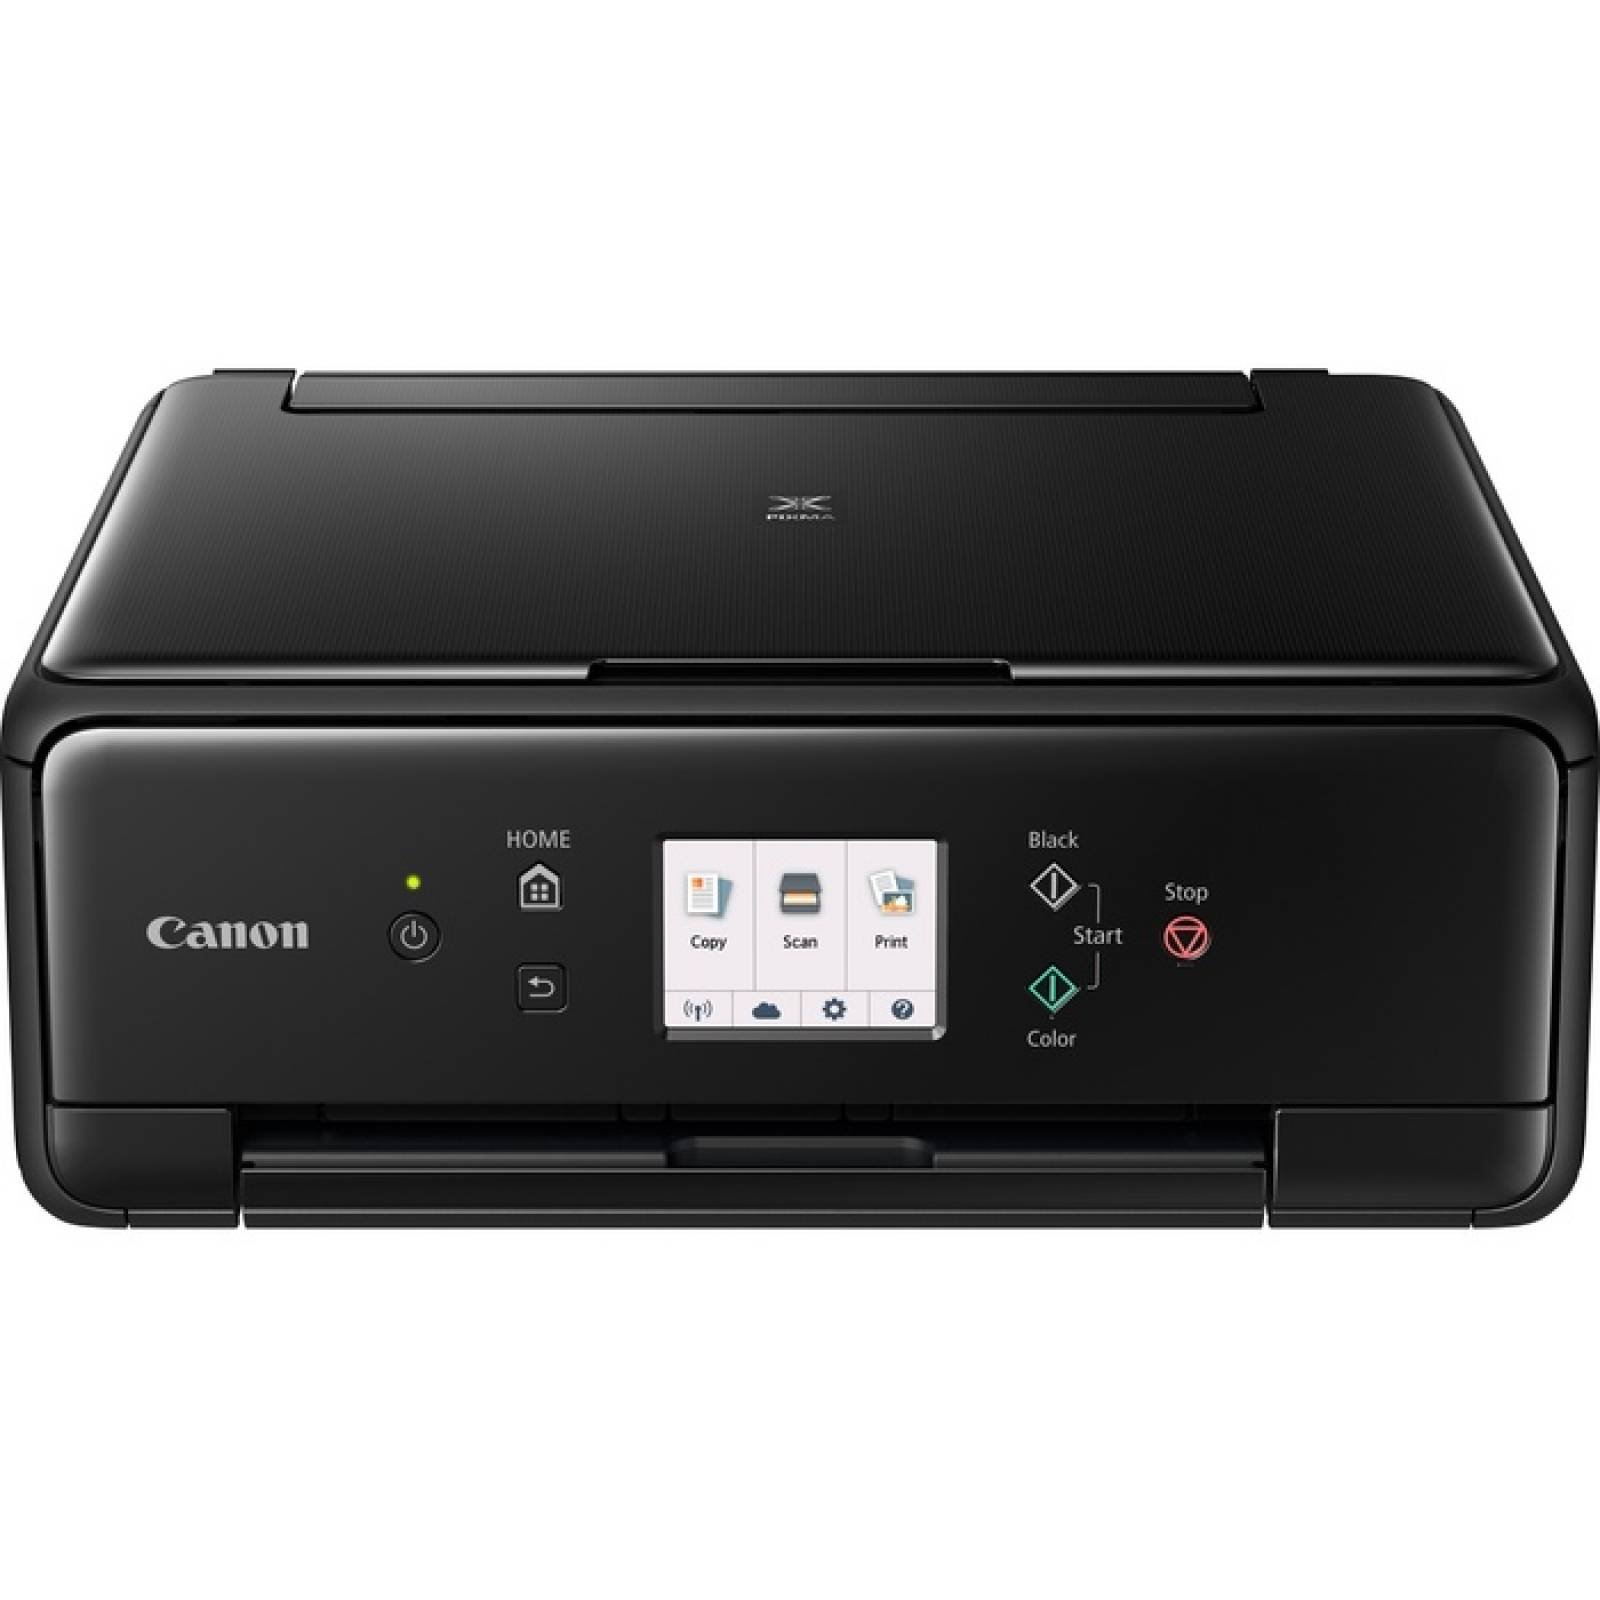 Impresora multifuncin de inyeccin de tinta PIXMA TS6120 de Canon  Color  Impresin fotogrfica  Escritorio